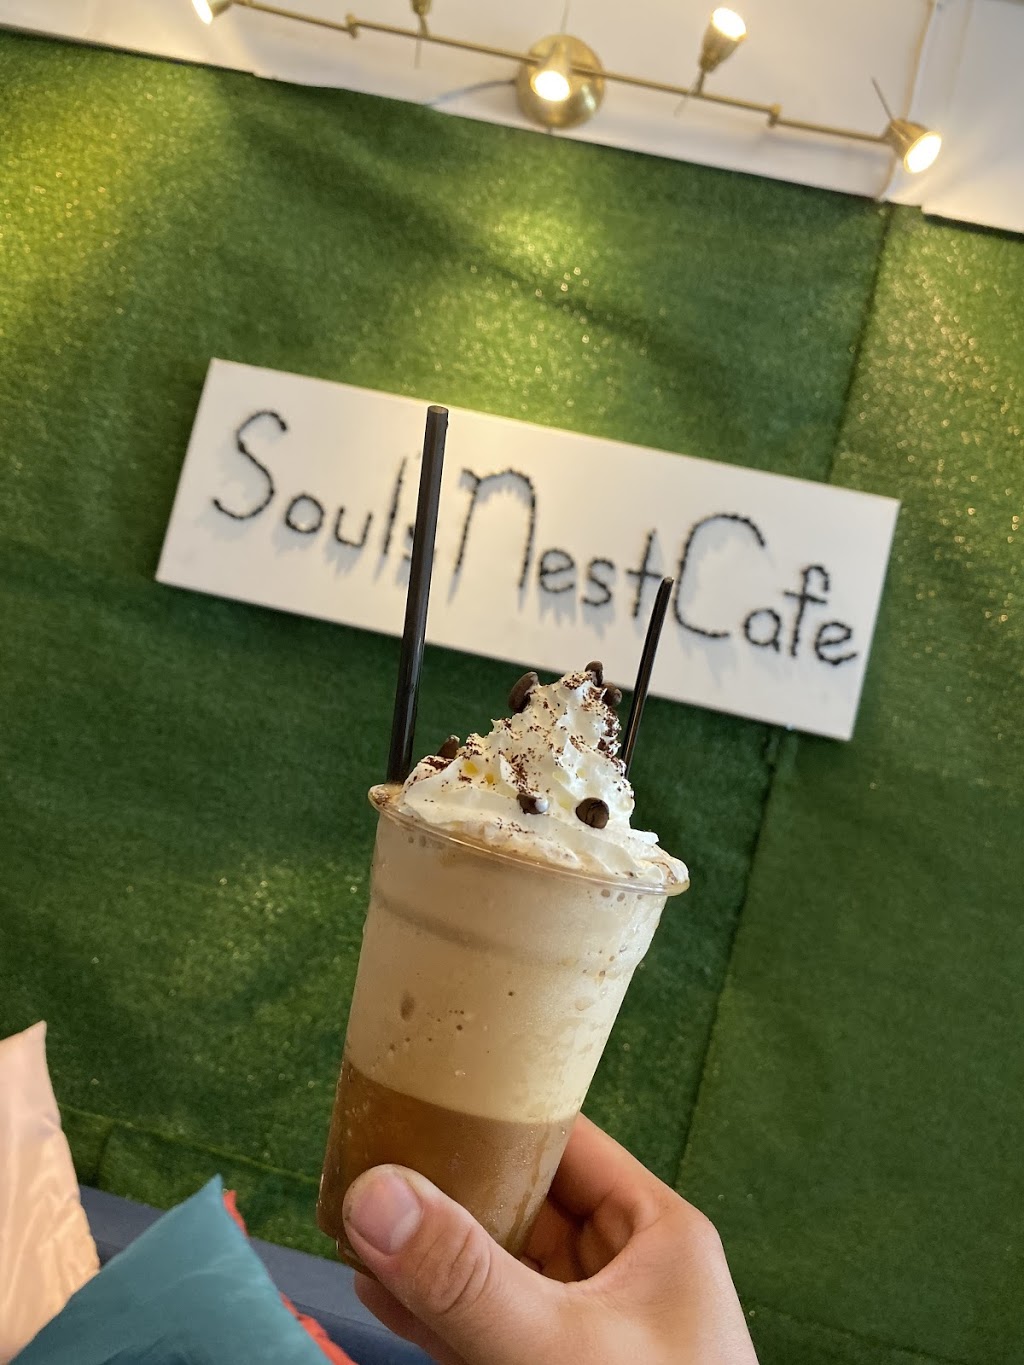 Souls Nest Cafe | cafe | 41 Liverpool Rd, Ashfield NSW 2131, Australia